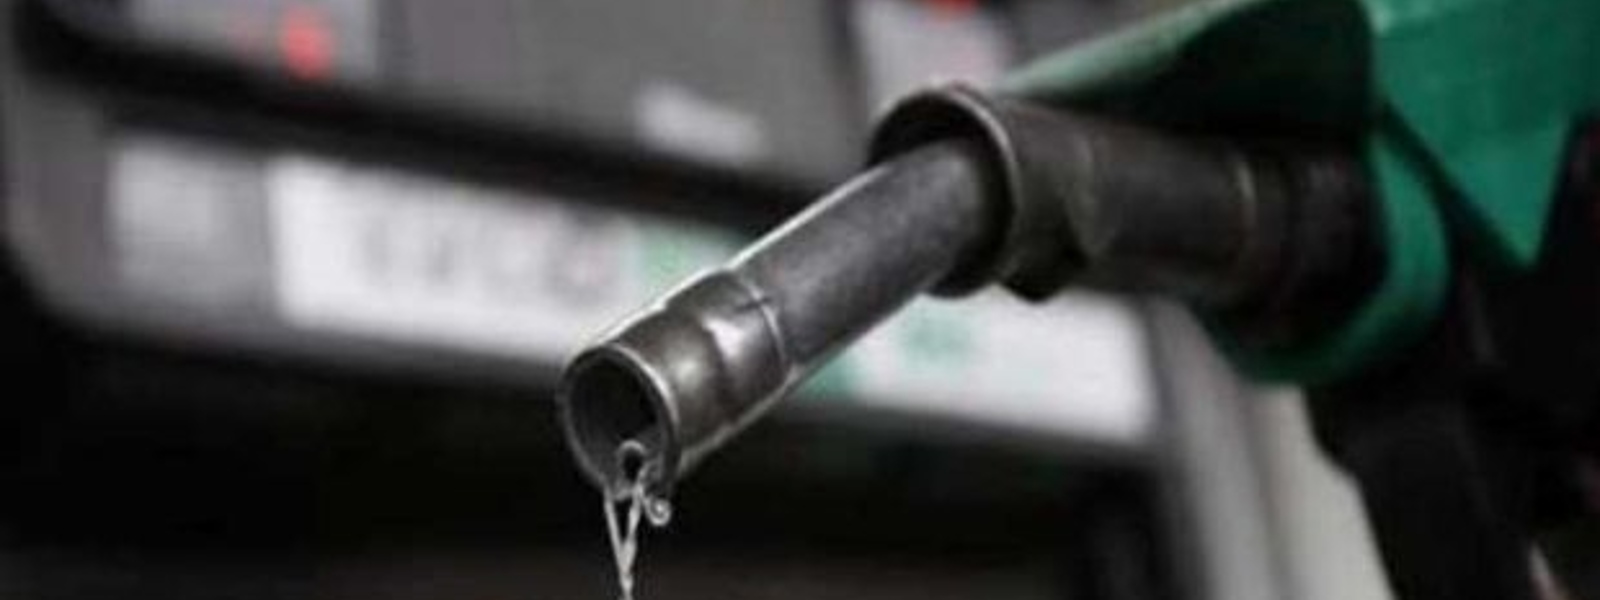 Fuel Shortage: 20 filling stations facing closure